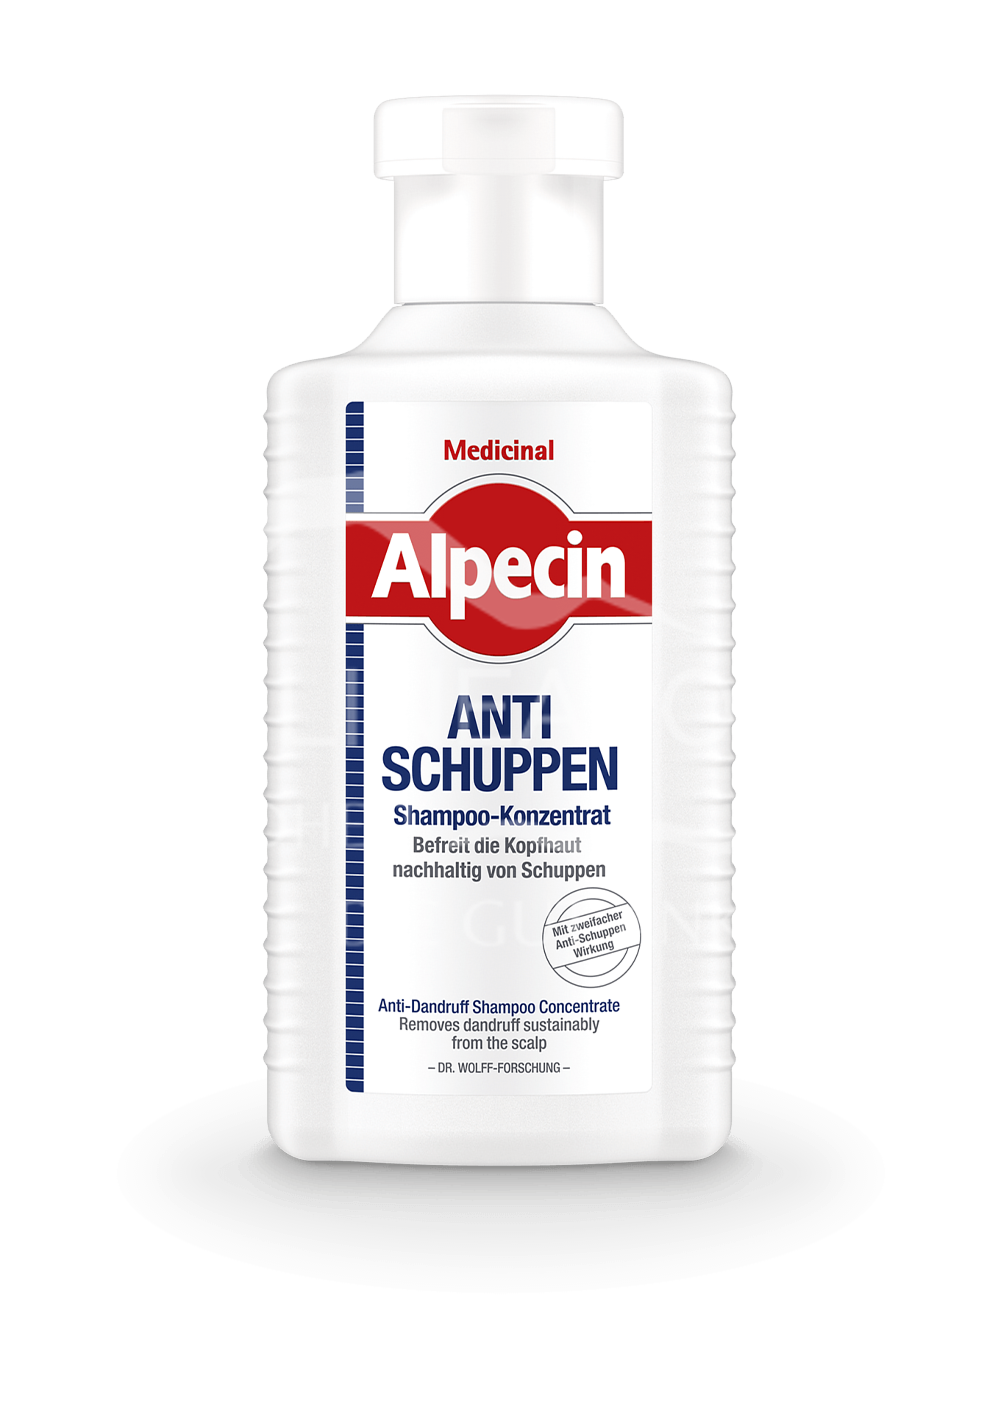 Alpecin Medicinal Shampoo-Konzentrat Anti-Schuppen 200 ml